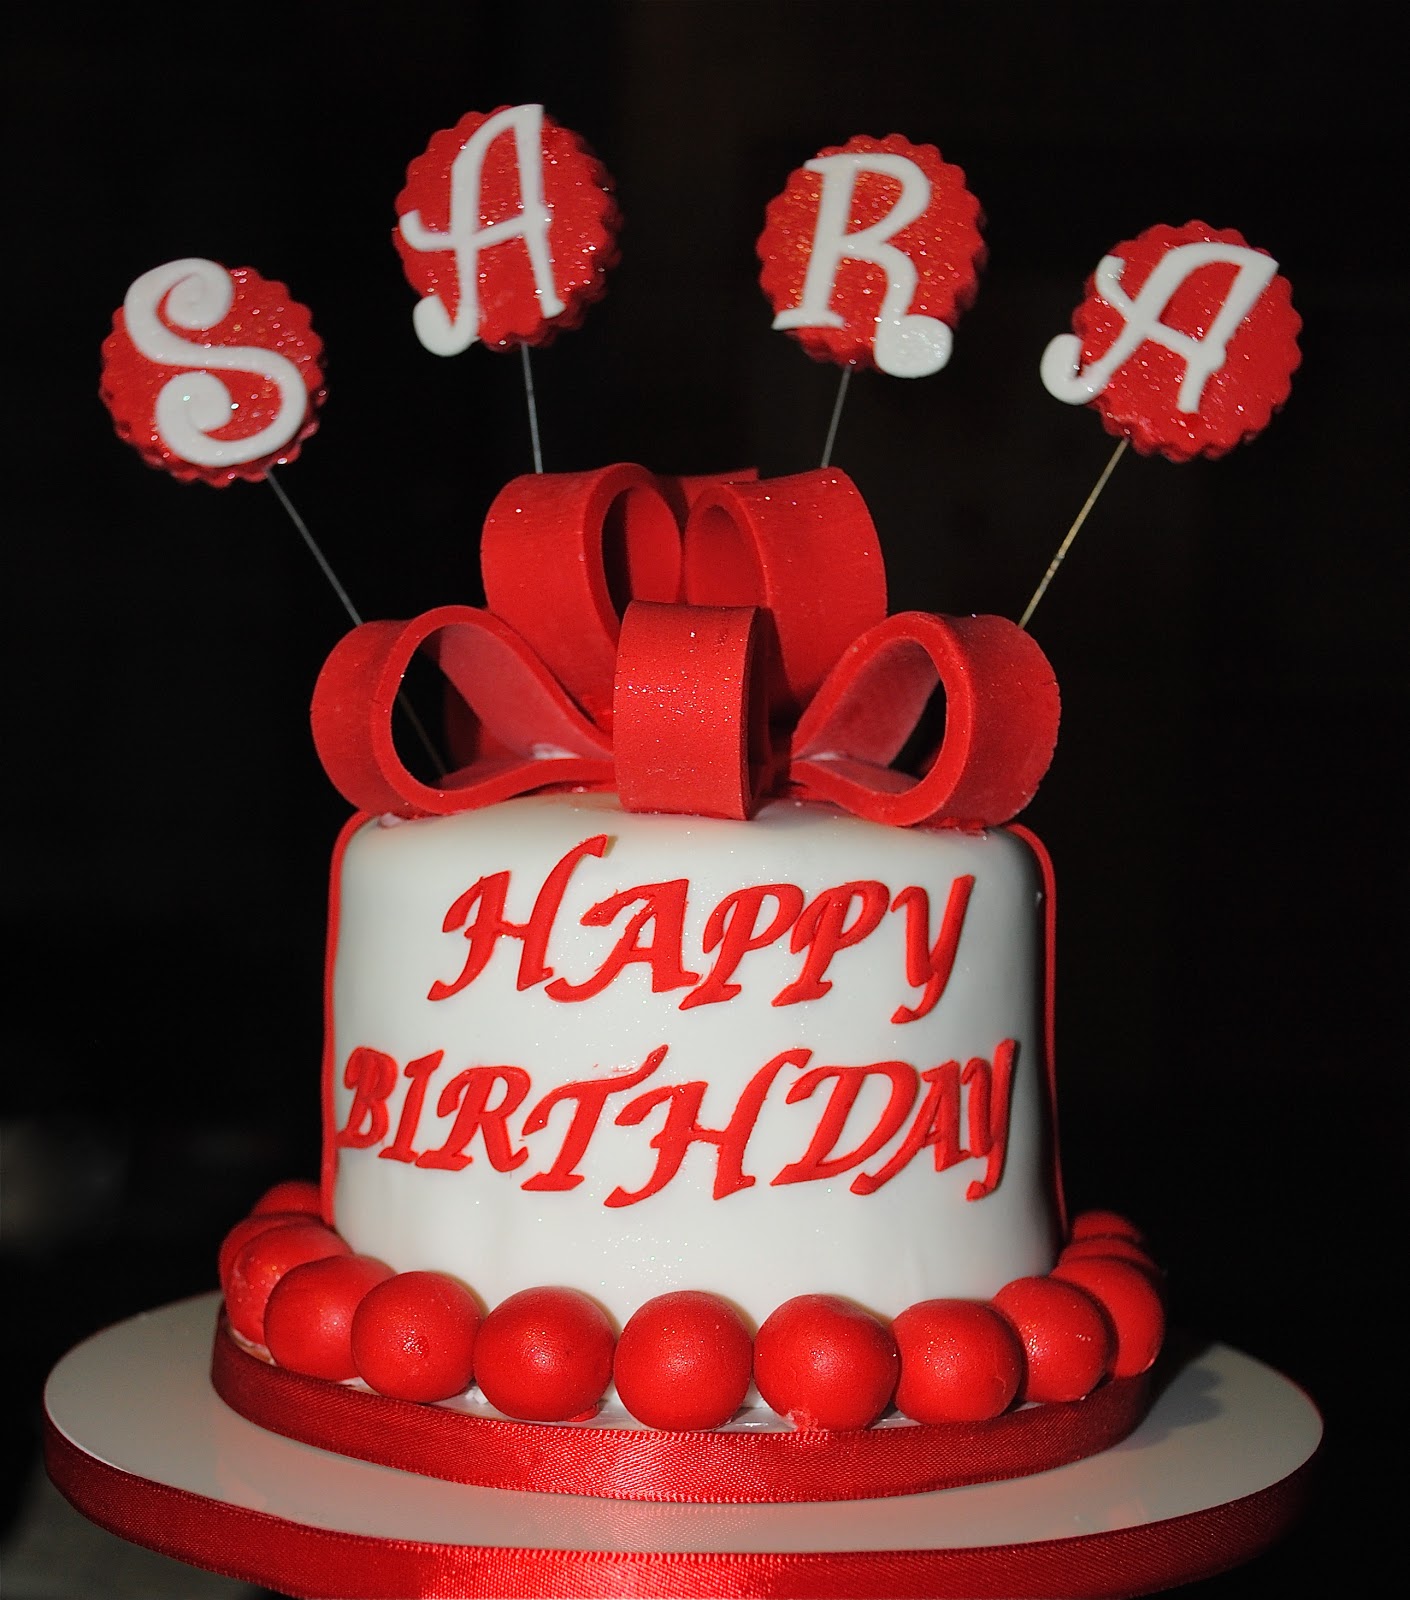 Happy Birthday Sara! 